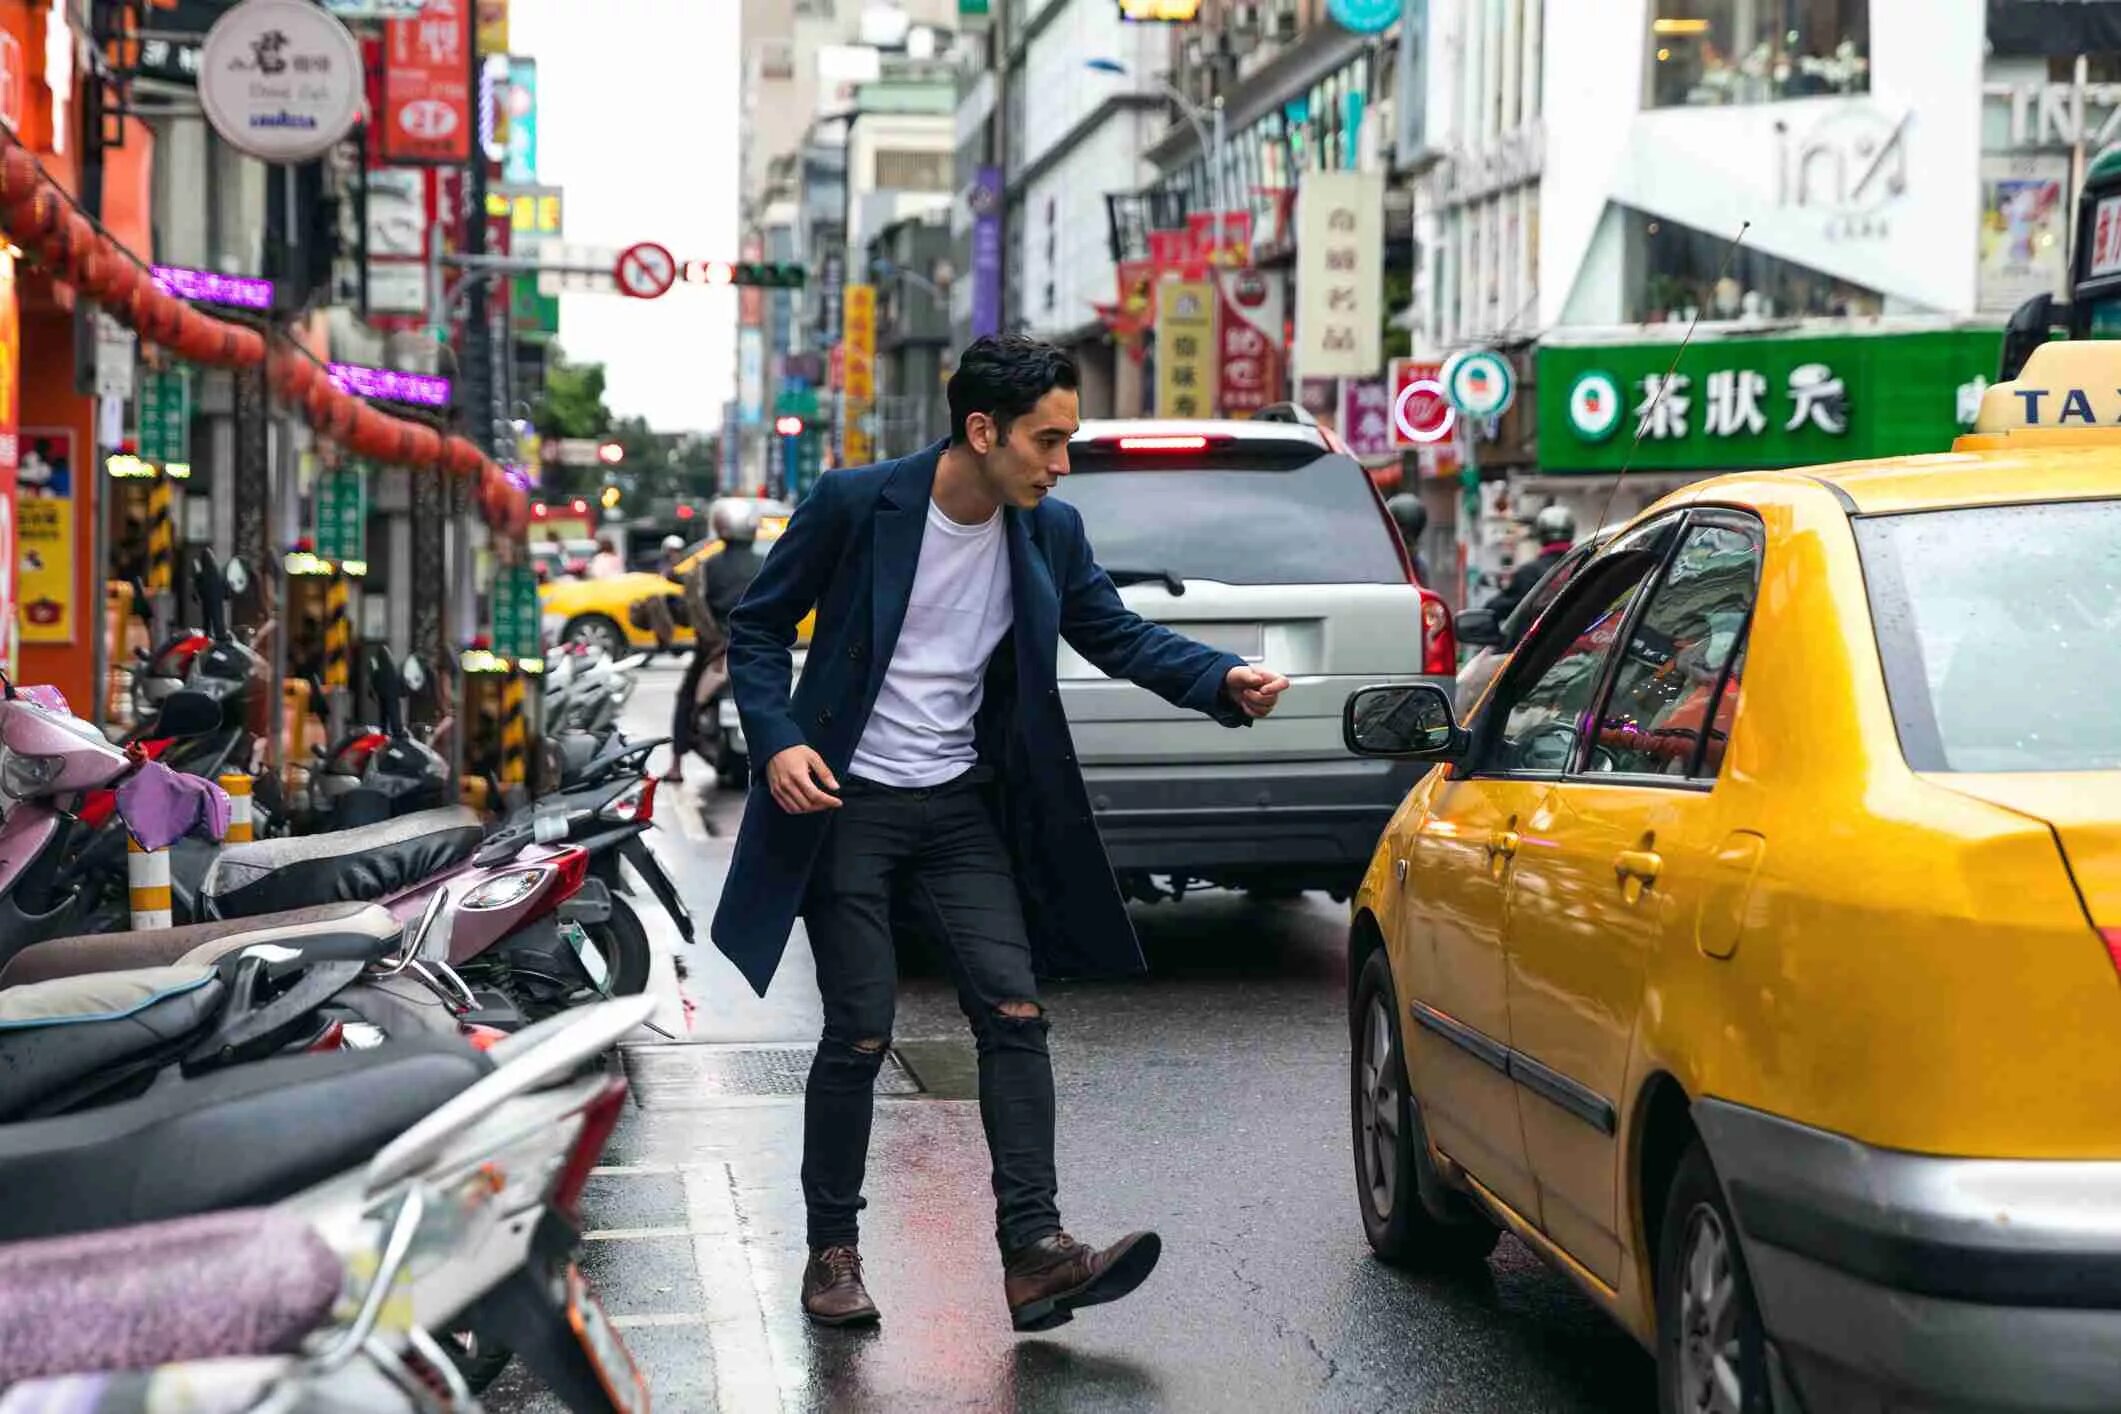 He took a taxi. Такси в Китае. Такси люди на улице. Китайское такси с человеком. Человек ловит такси.